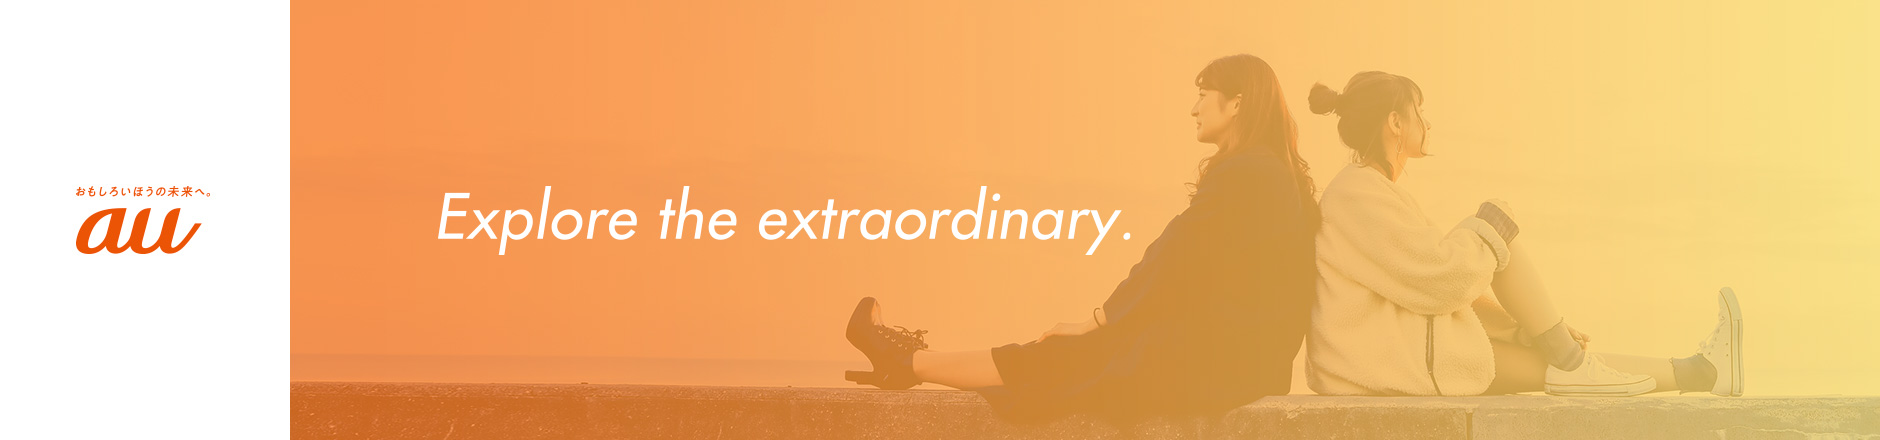 Explore the extraordinary.